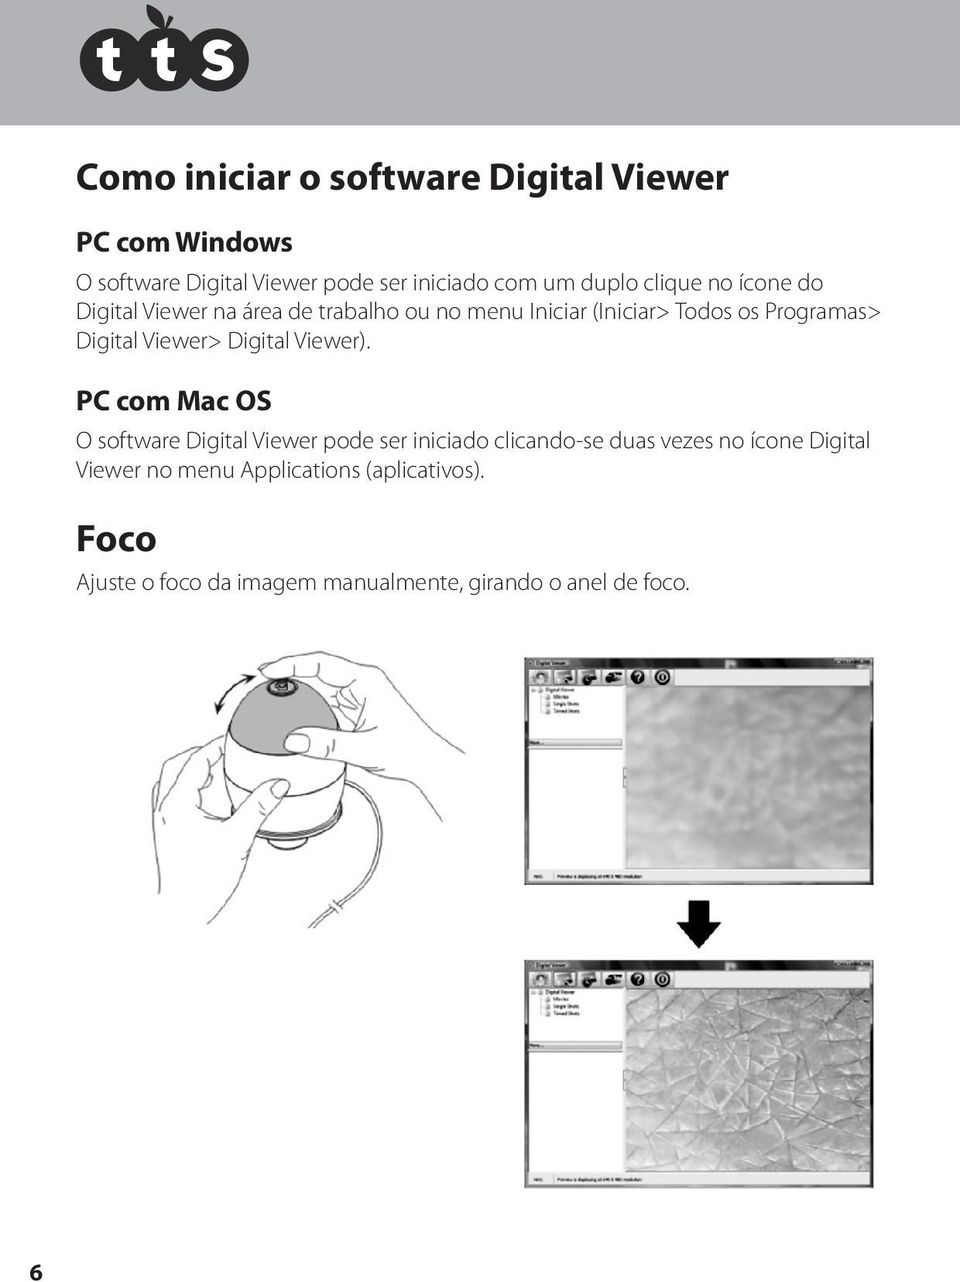 Viewer> Digital Viewer).